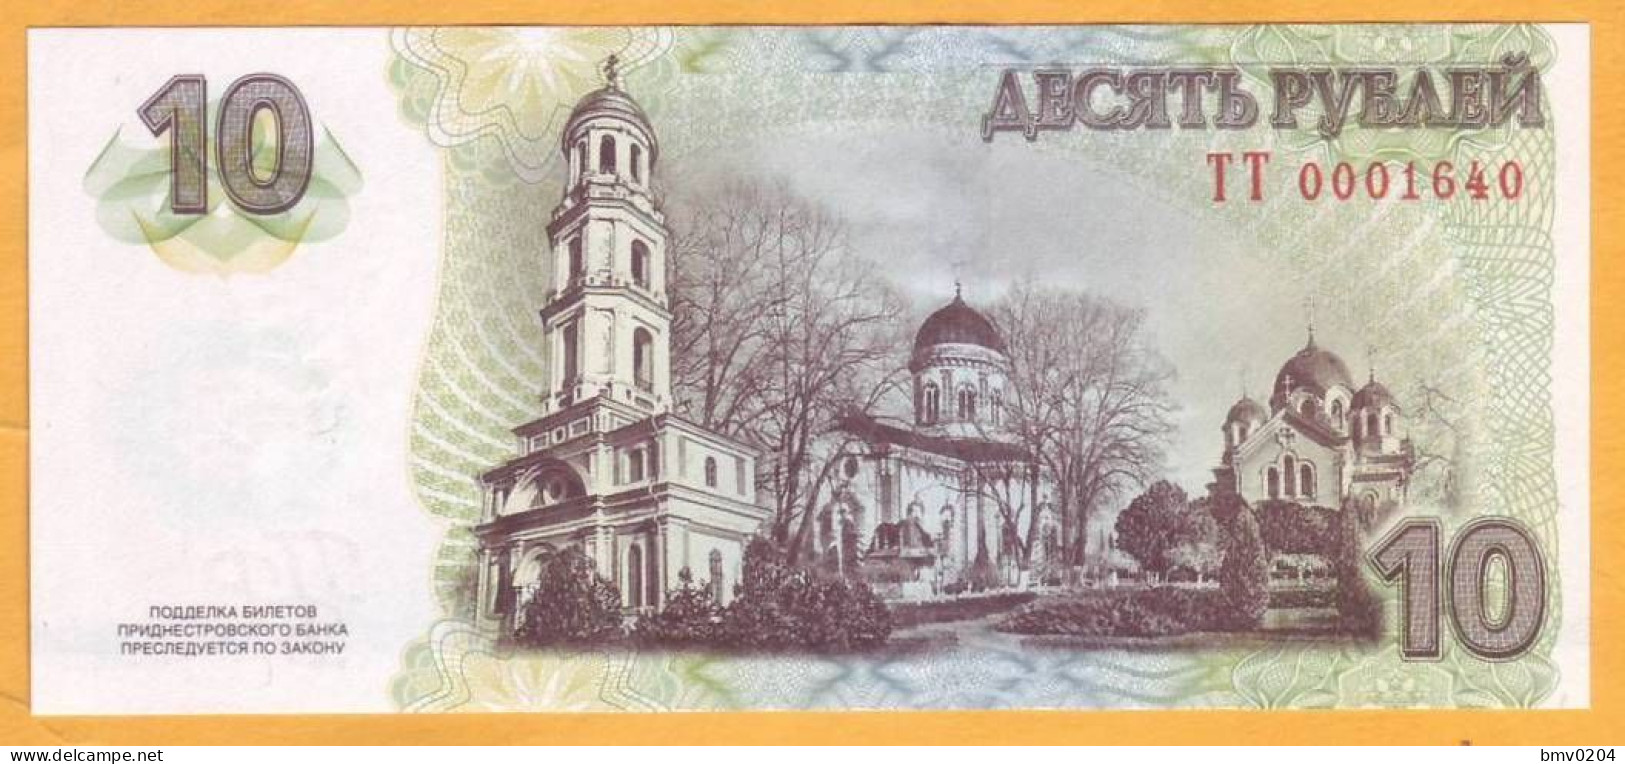 2014 Moldova Transnistria PMR  10 Rub. Booklet "20 Years Of The National Bank", UNC   ТТ 0001640 - Moldawien (Moldau)